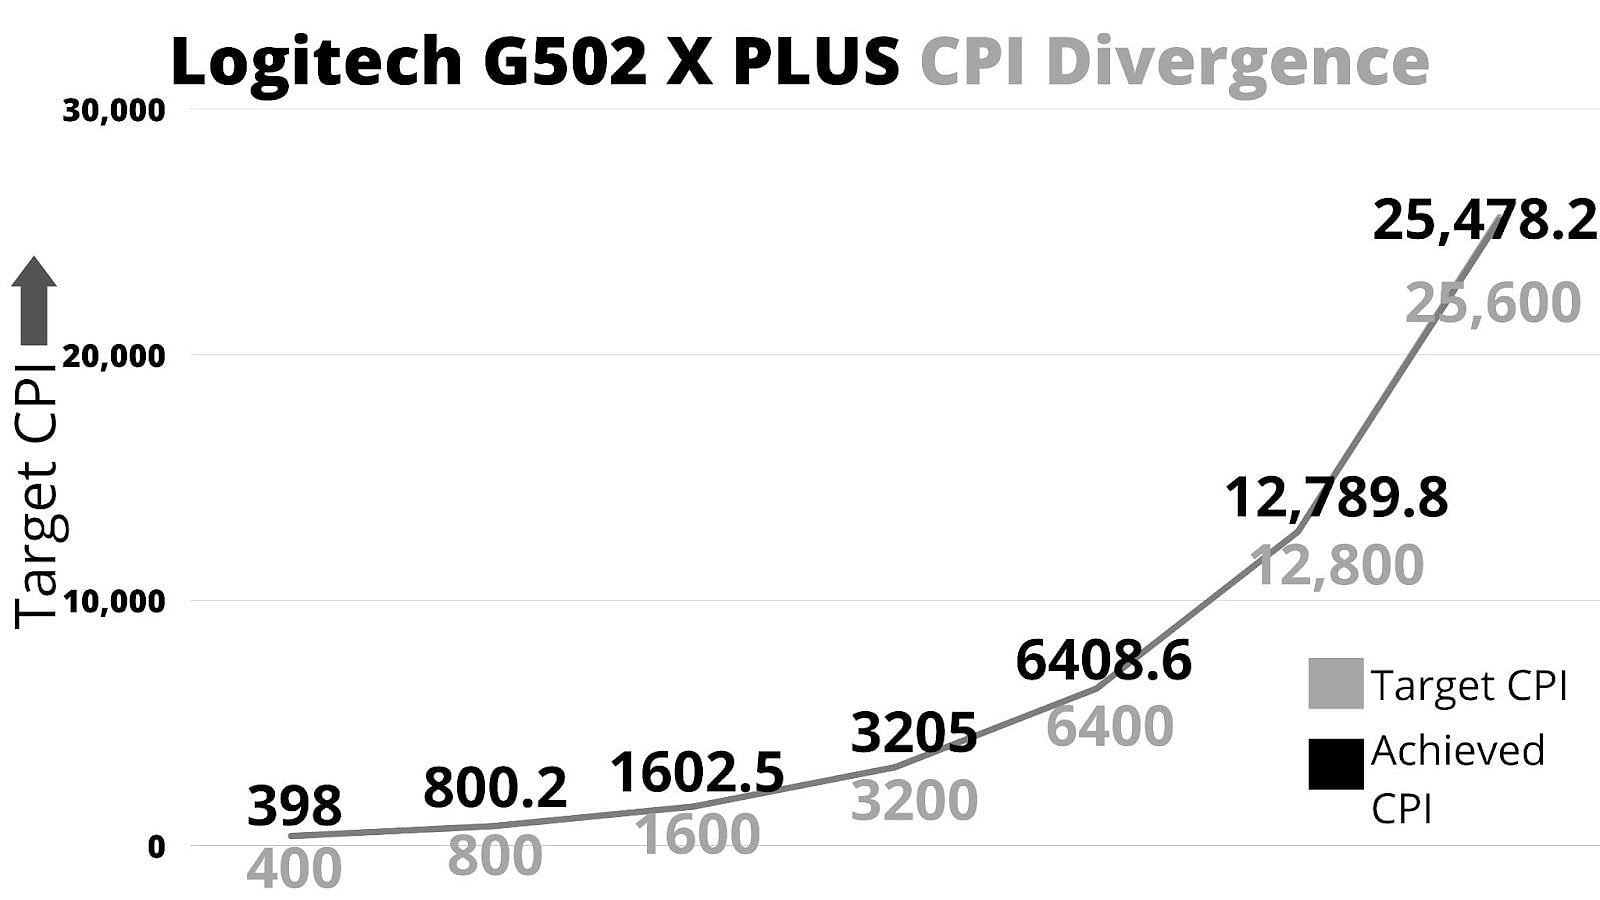 CPI divergence results of the G502 X PLUS (Image via Sportskeeda)